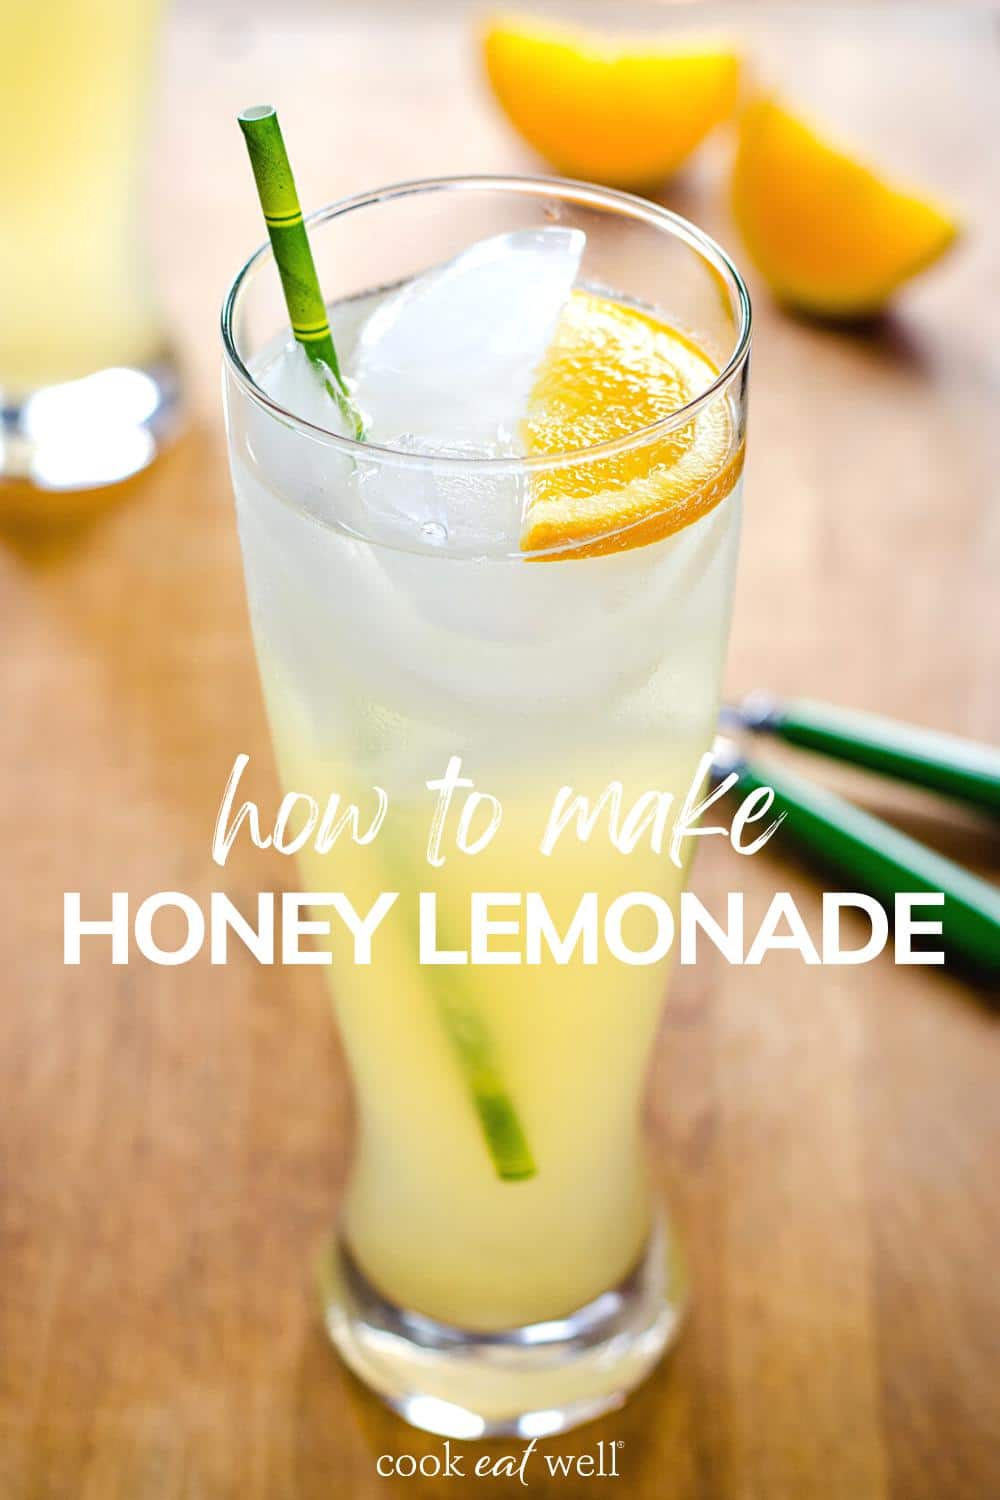 How to make honey lemonade